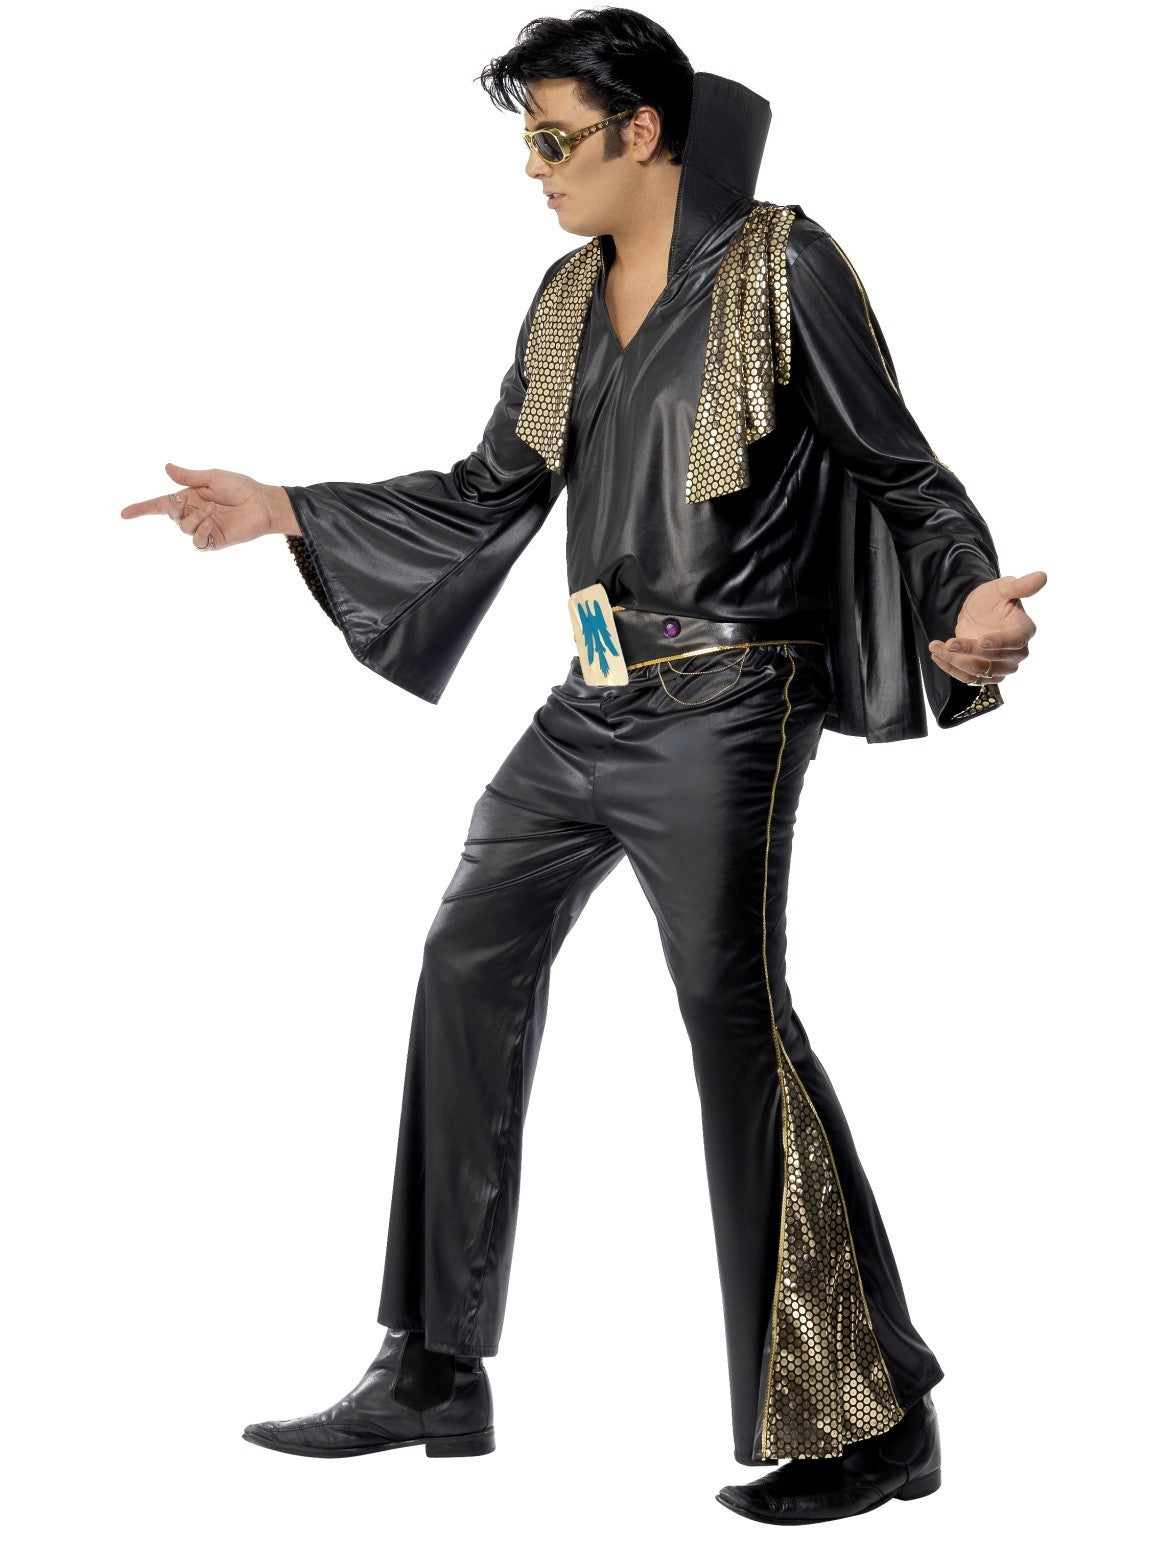 Black and Gold Elvis Costume